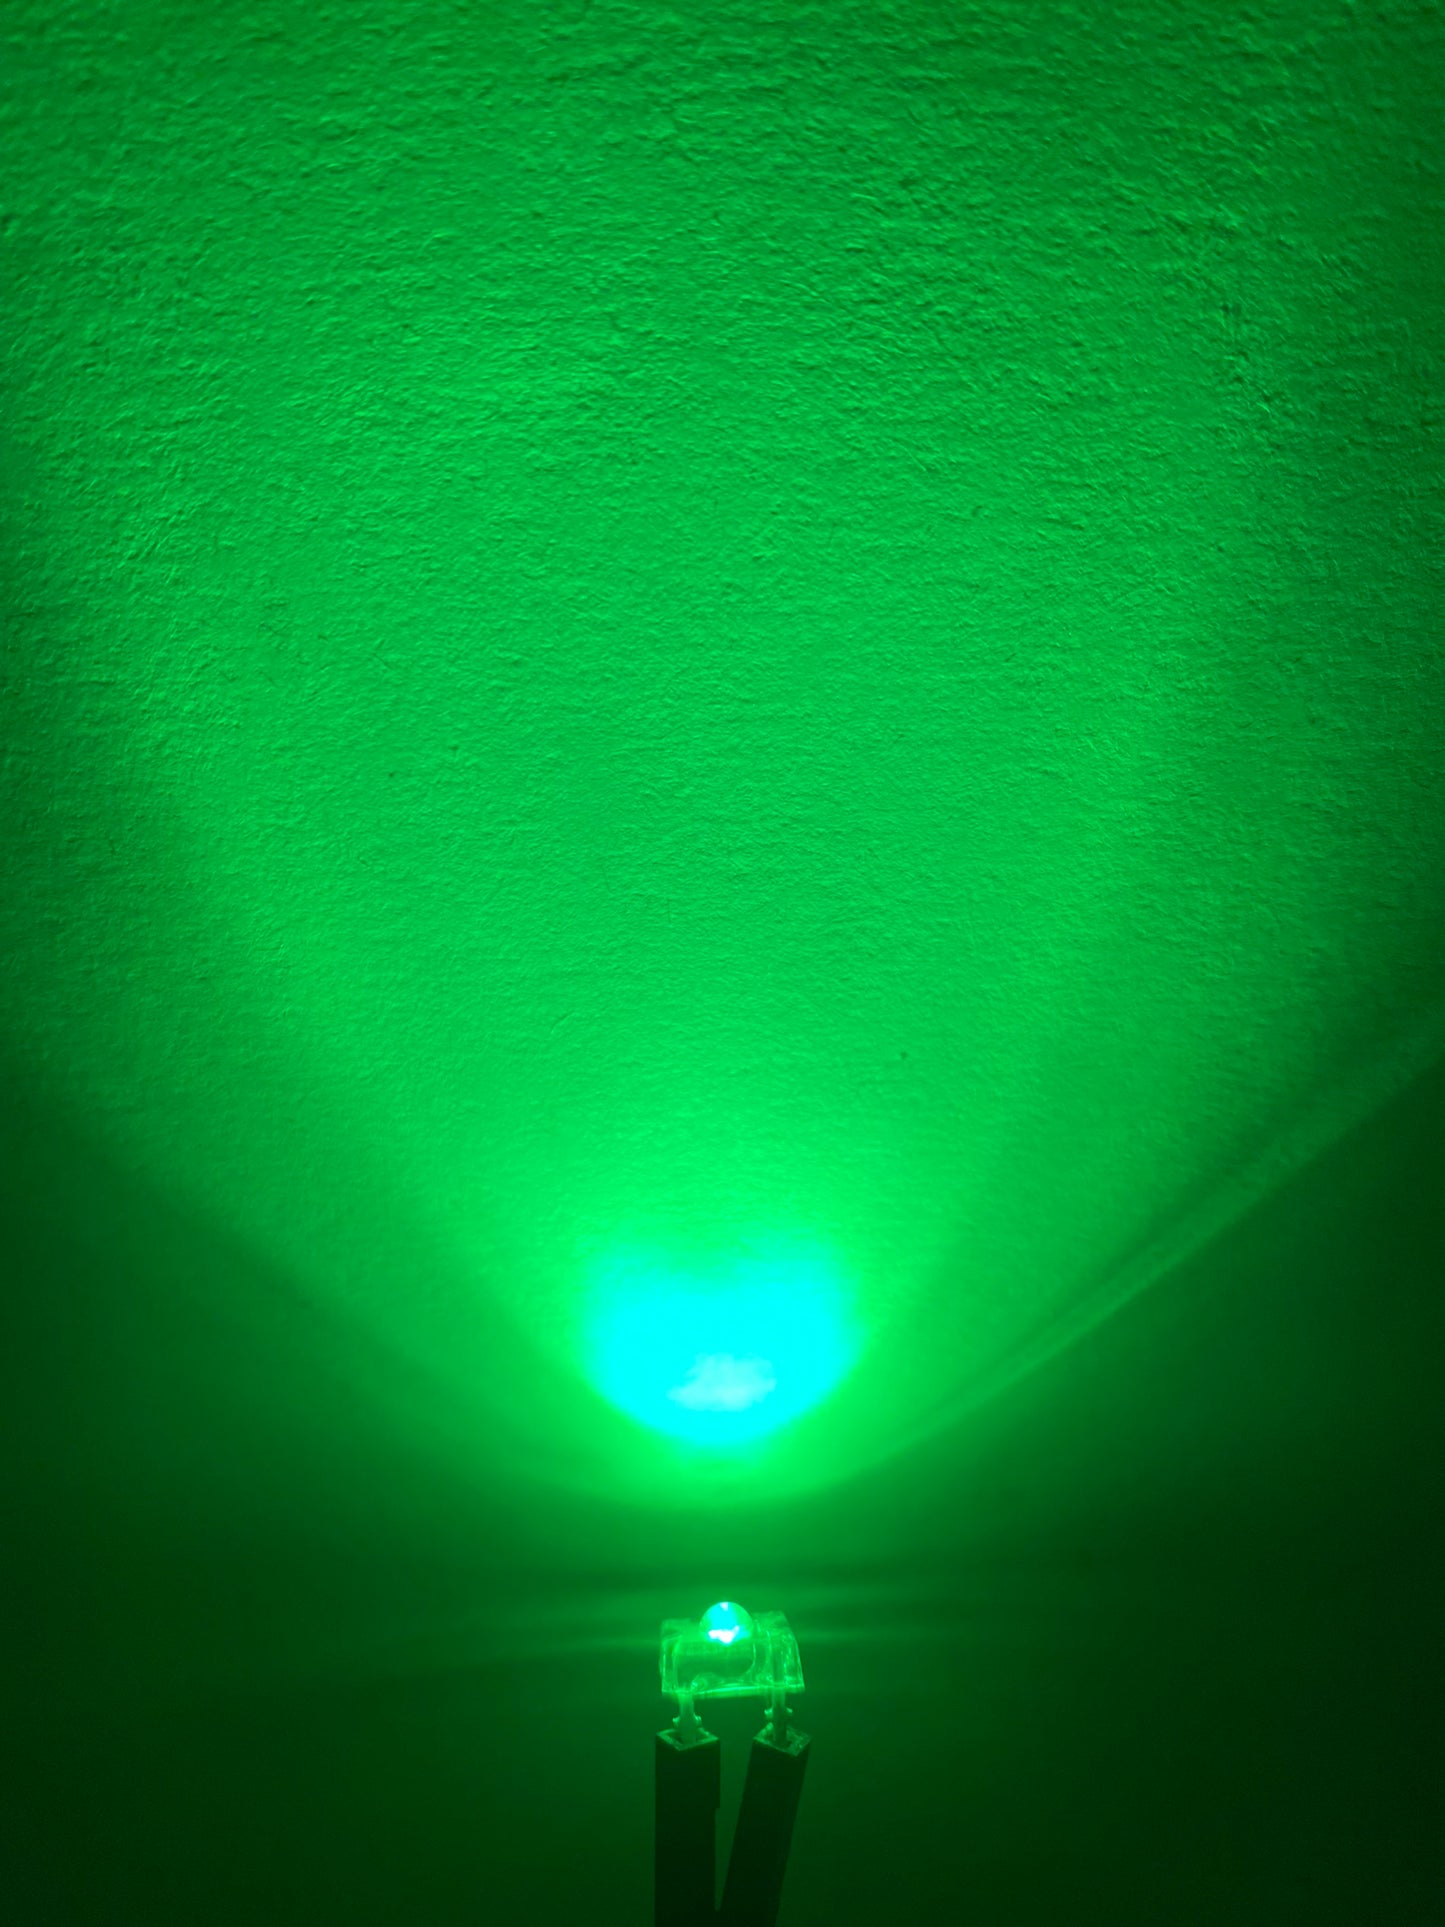 Diodo LED piraña 3mm ultrabrillante 4 pines | Diodo emisor de luz LED Cannibalism